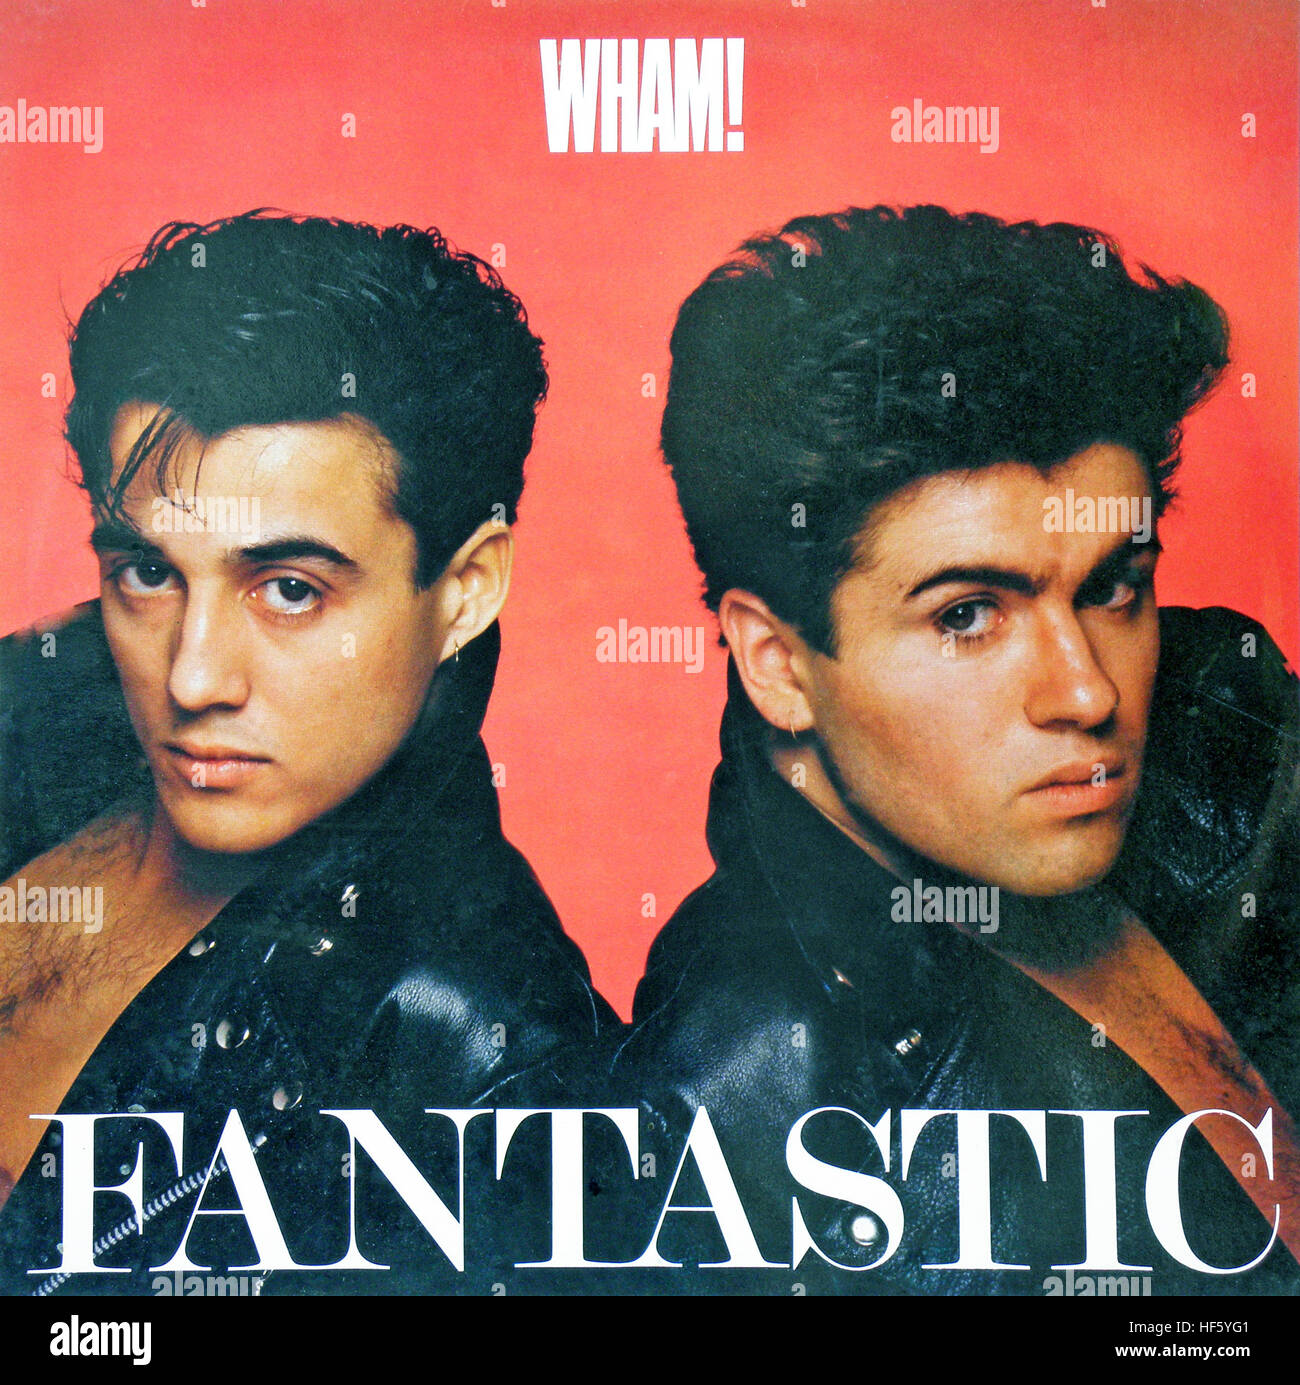 Wham! LP 'Fantastic', gramophone record cover, George Michael & Andrew Ridgeley, 1983. Stock Photo